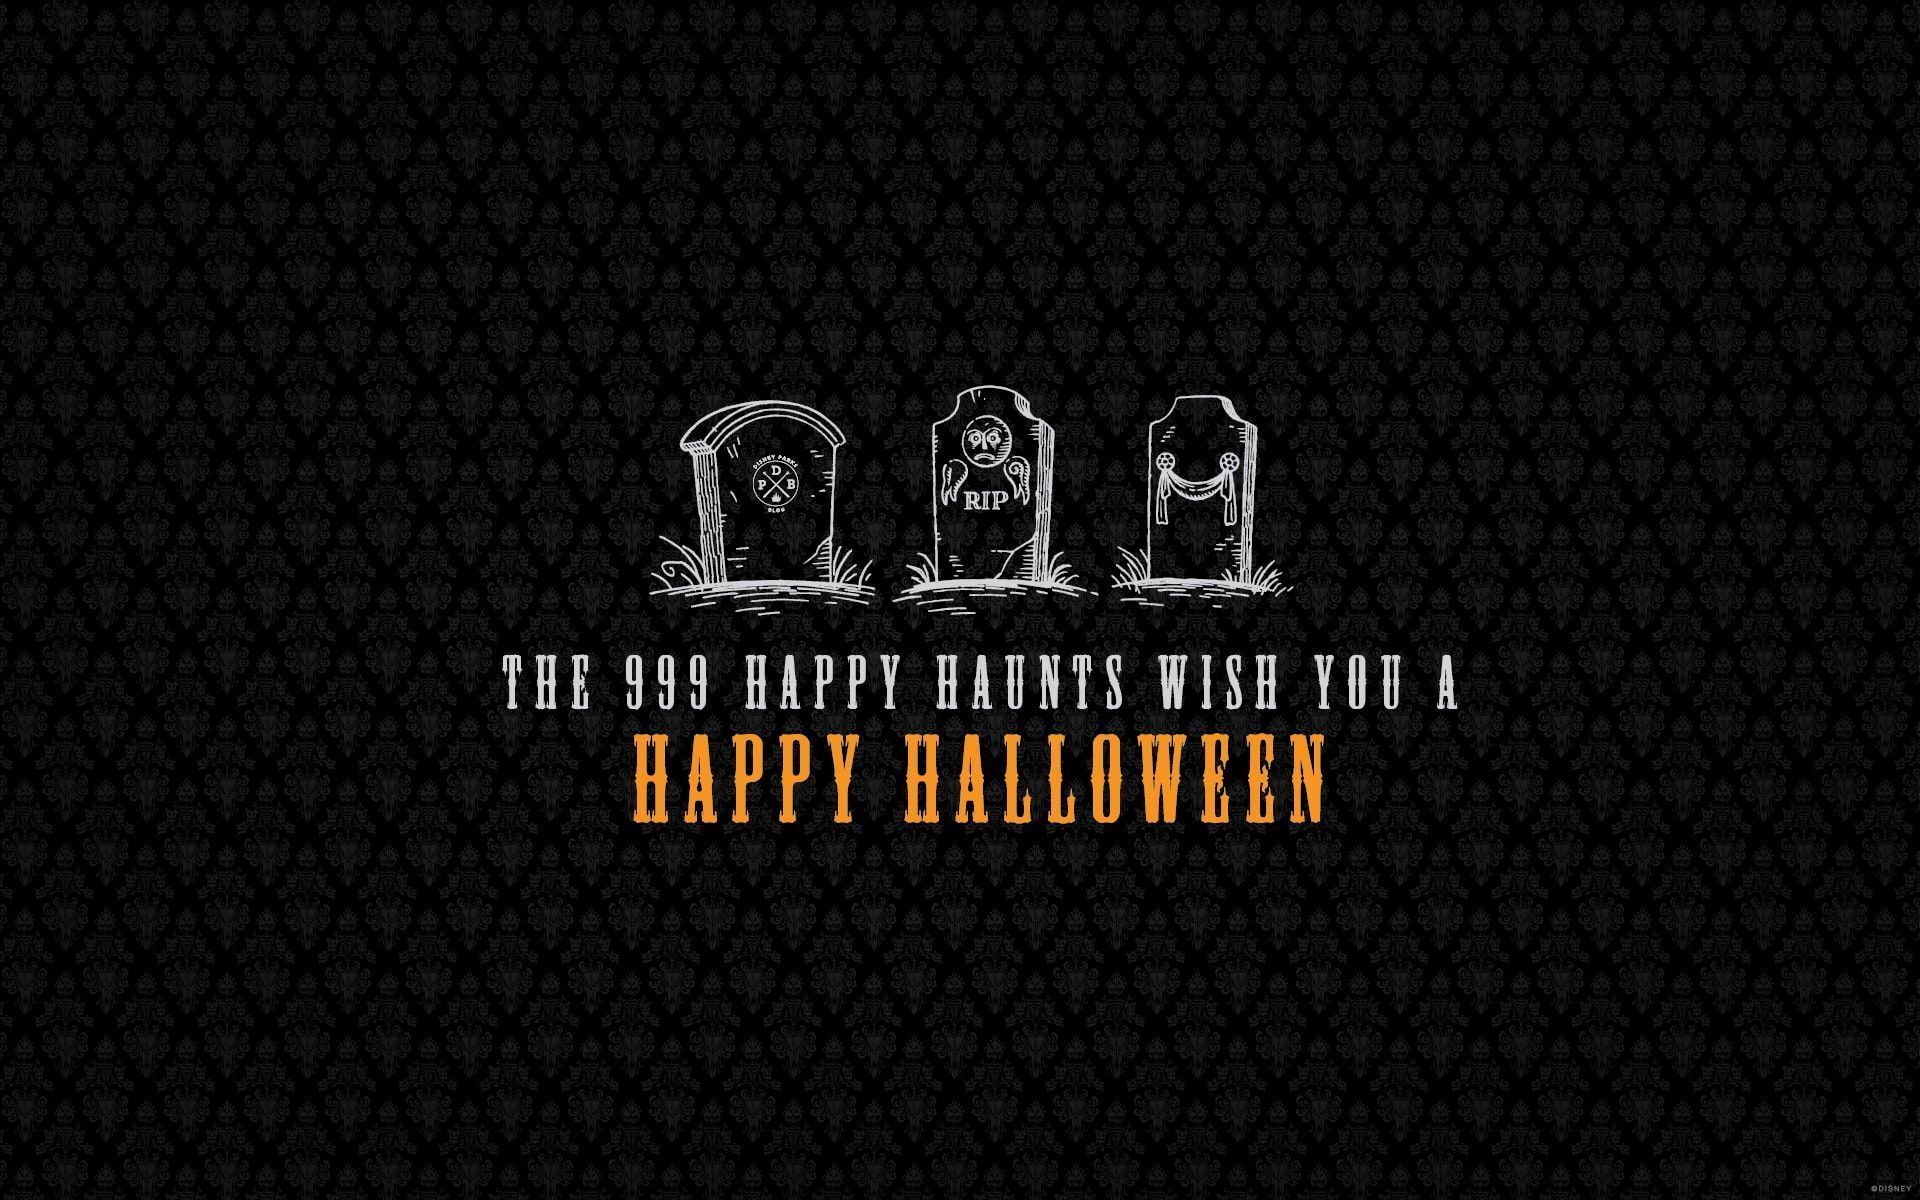 The 999 happy haunts wish you a happy Halloween wallpaper - Desktop, Halloween, Halloween desktop, happy, cute Halloween, magic, spooky